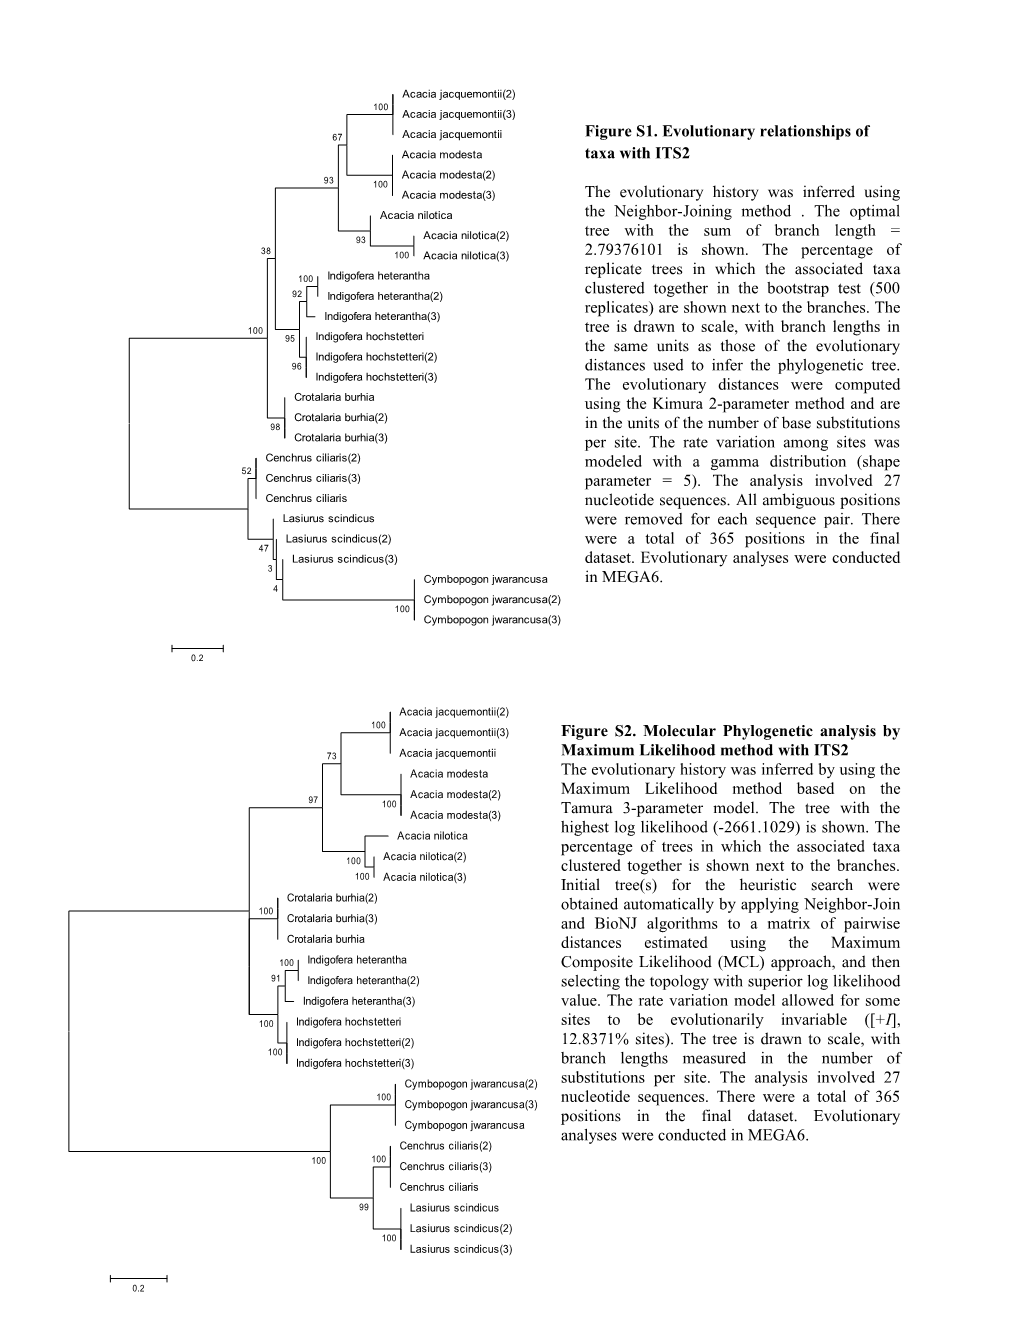 Figure S2. Molecular Phylogenetic Analysis by Maximum Likelihood Method with ITS2